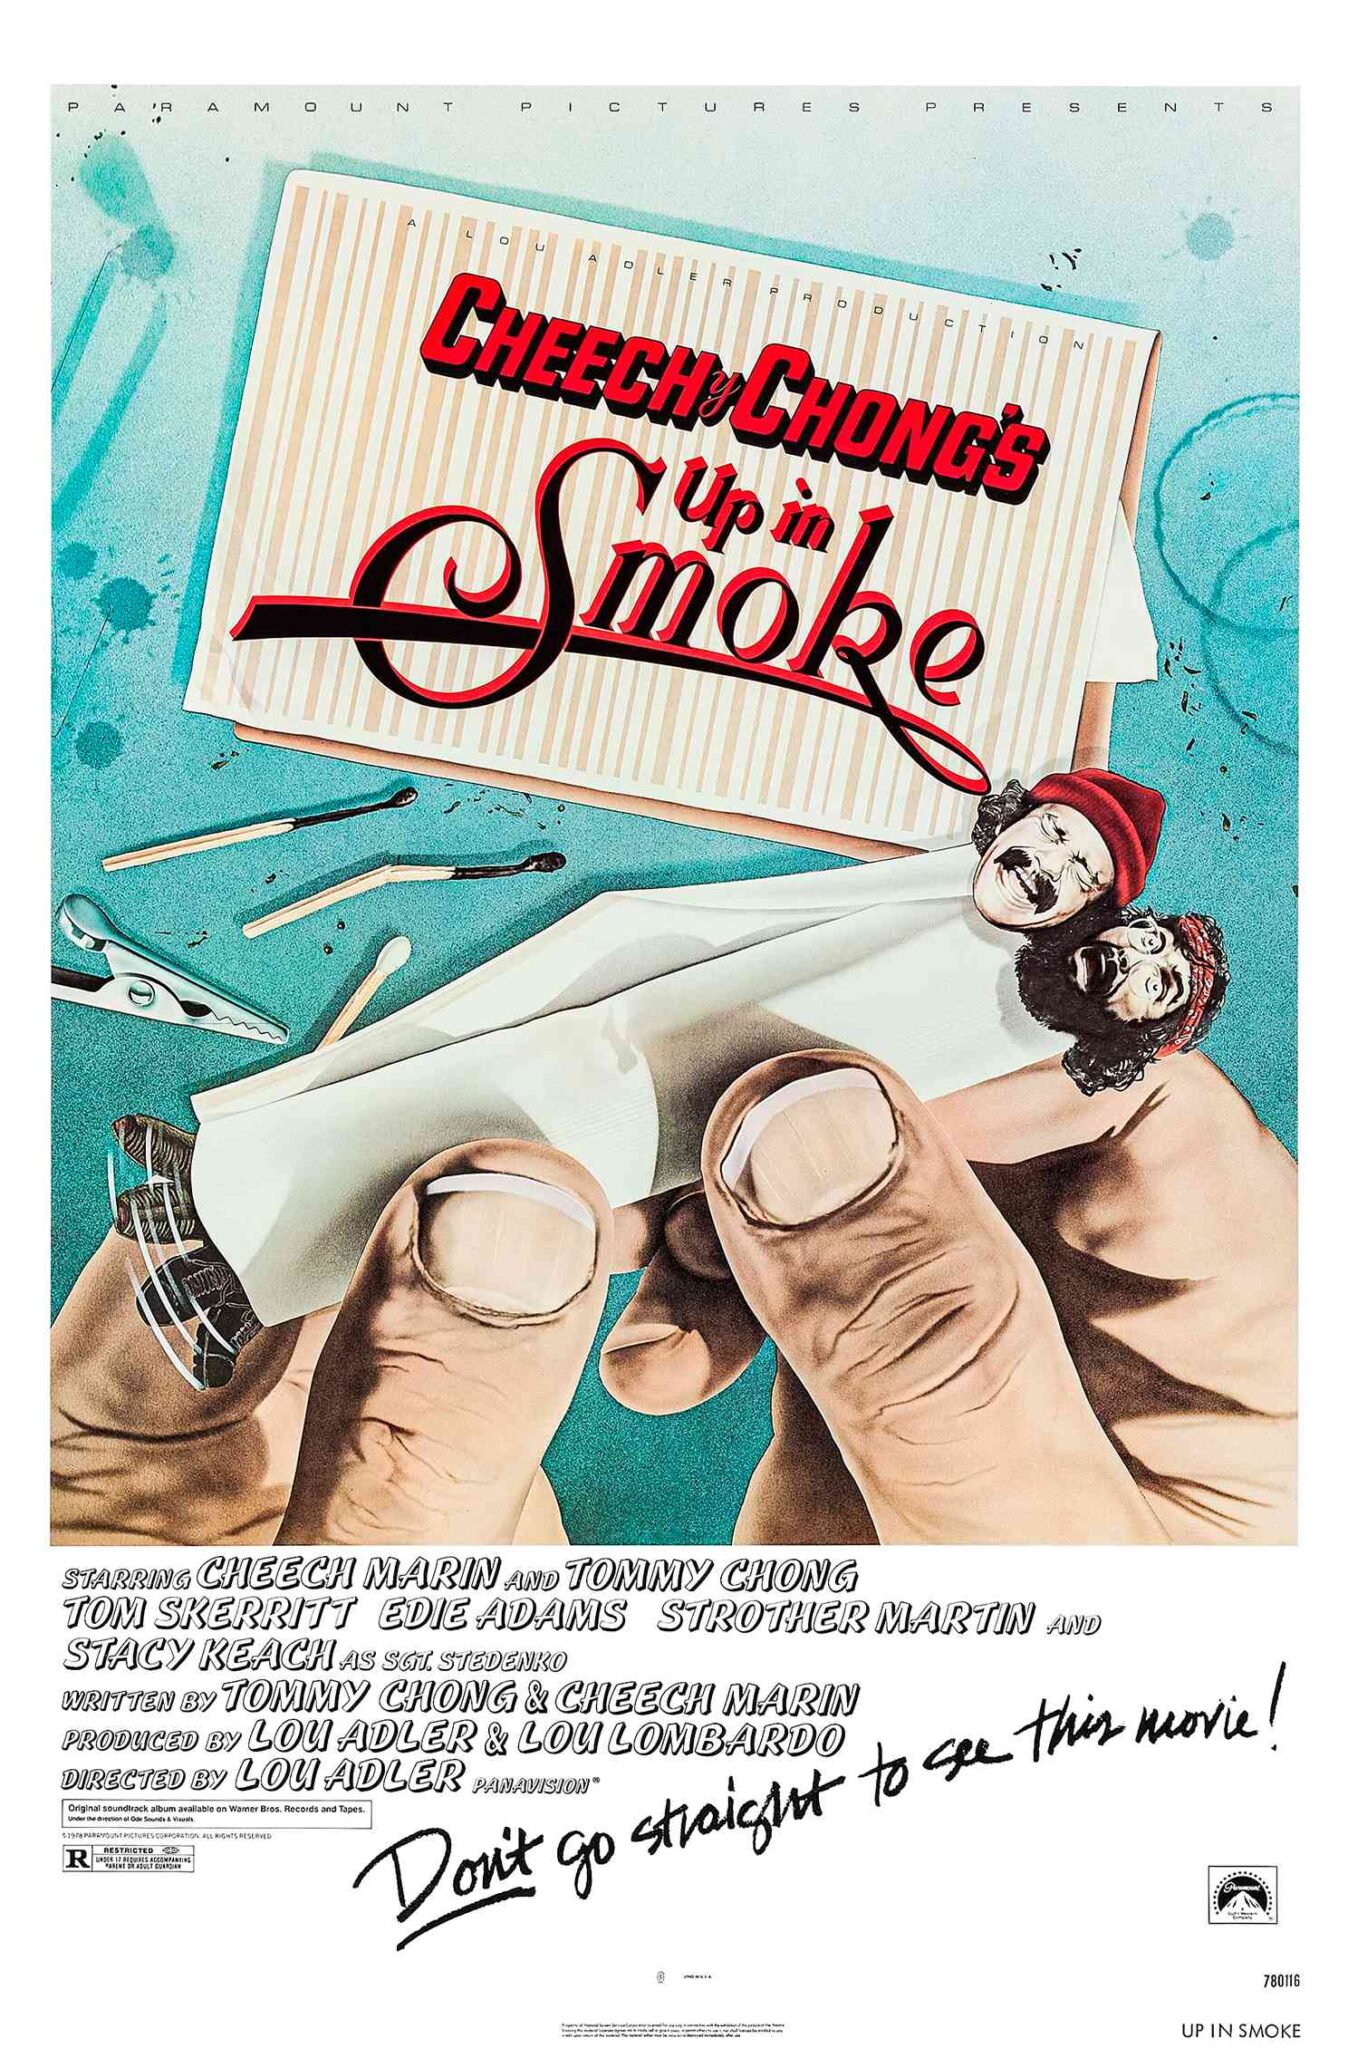 FULL MOVIE: Up In Smoke (1978)